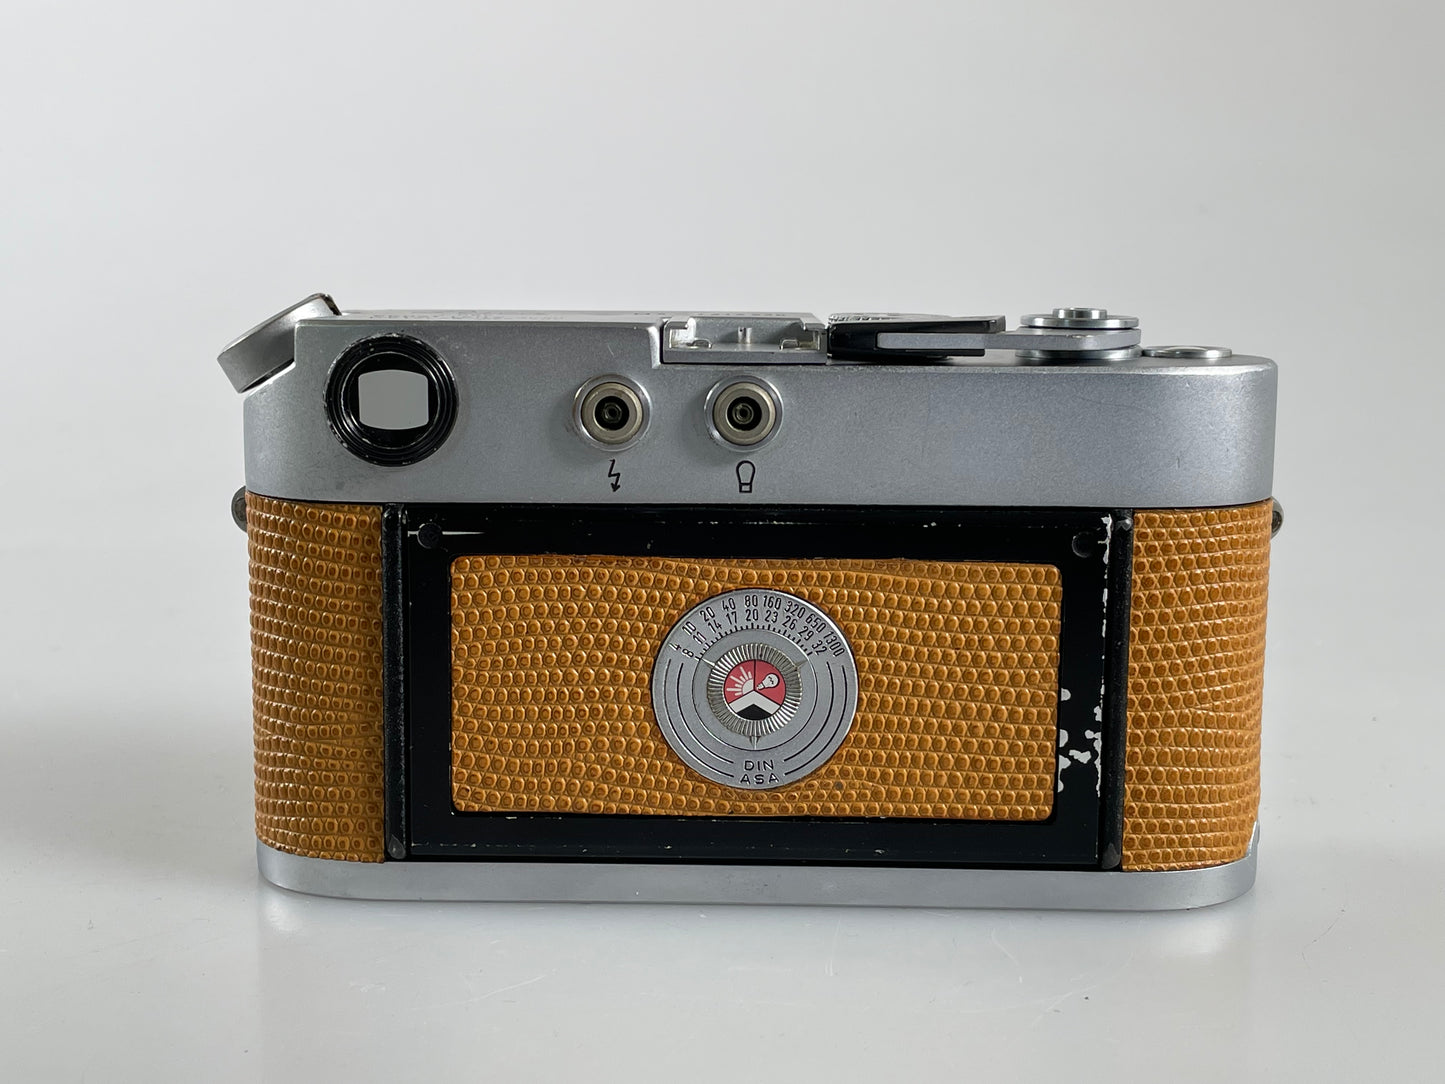 Leica M4 Chrome 35mm rangefinder film camera body